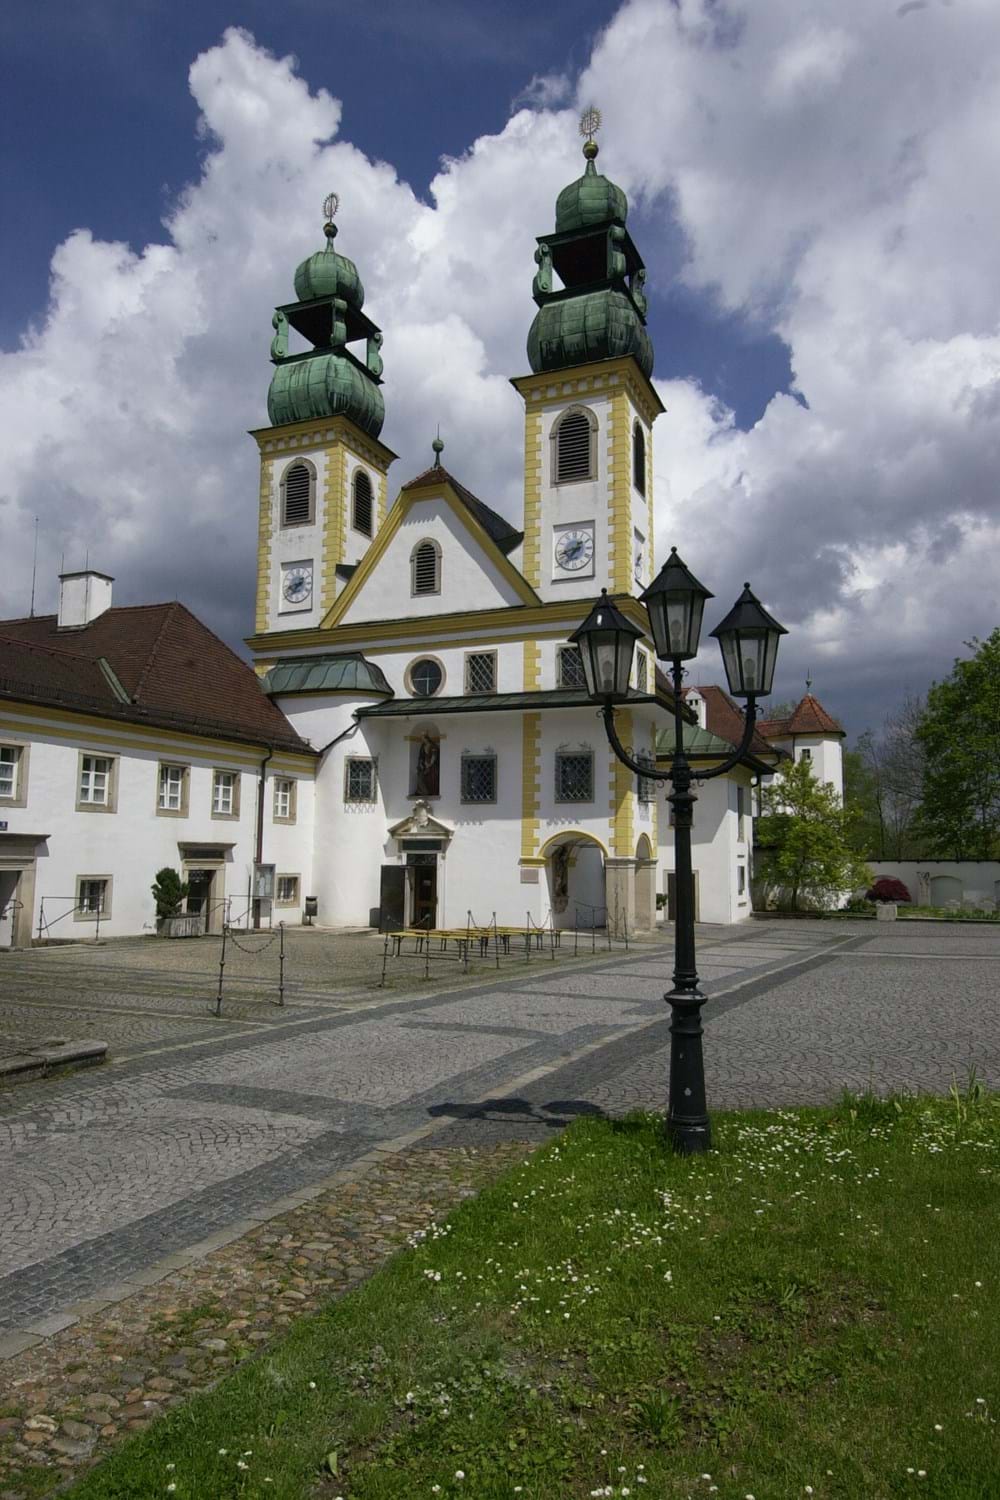 Pilgrimage Church "Mariahilf" in Passau | Passau Tourism